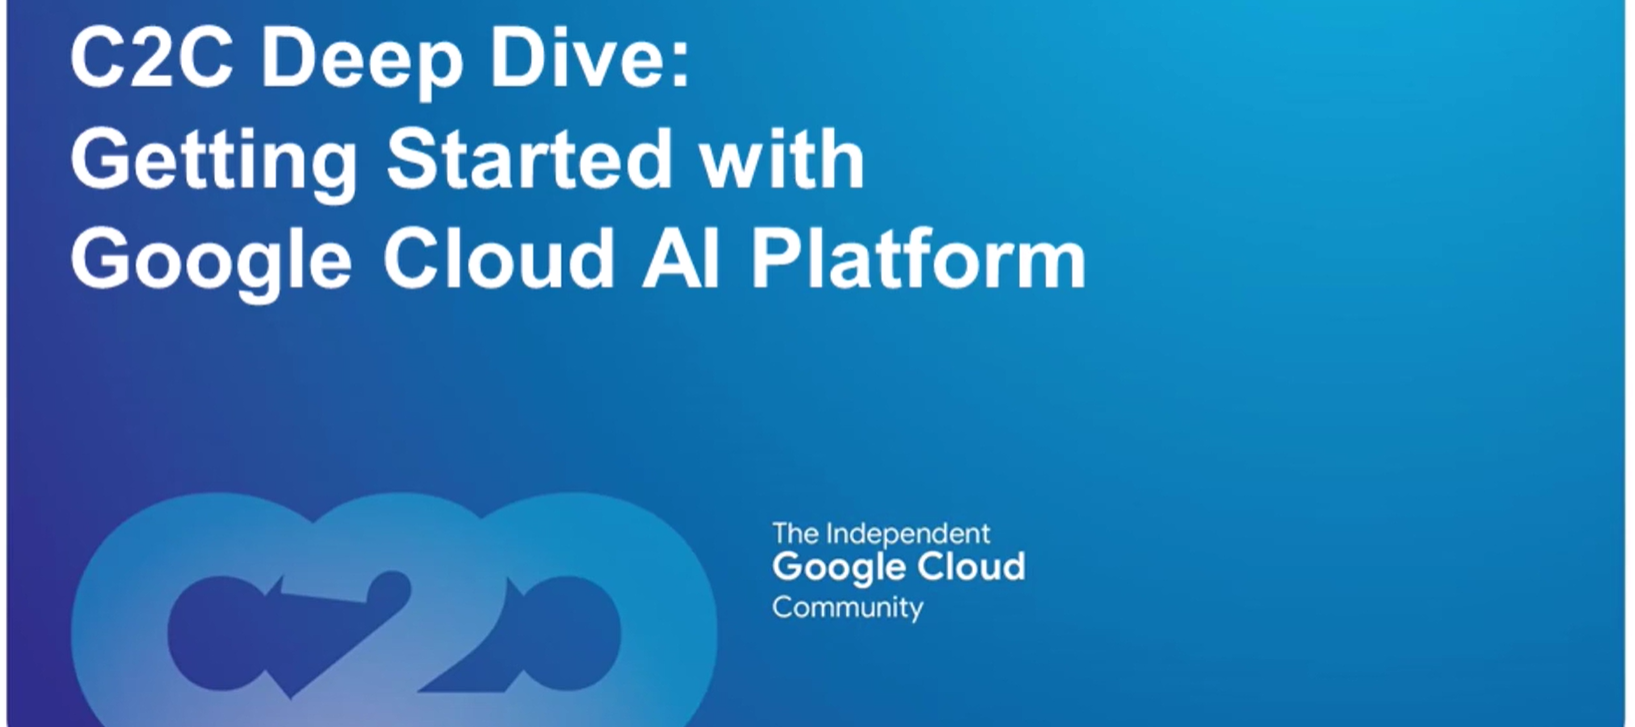 C2C Deep Dive: Getting Started with Google Cloud AI Platform